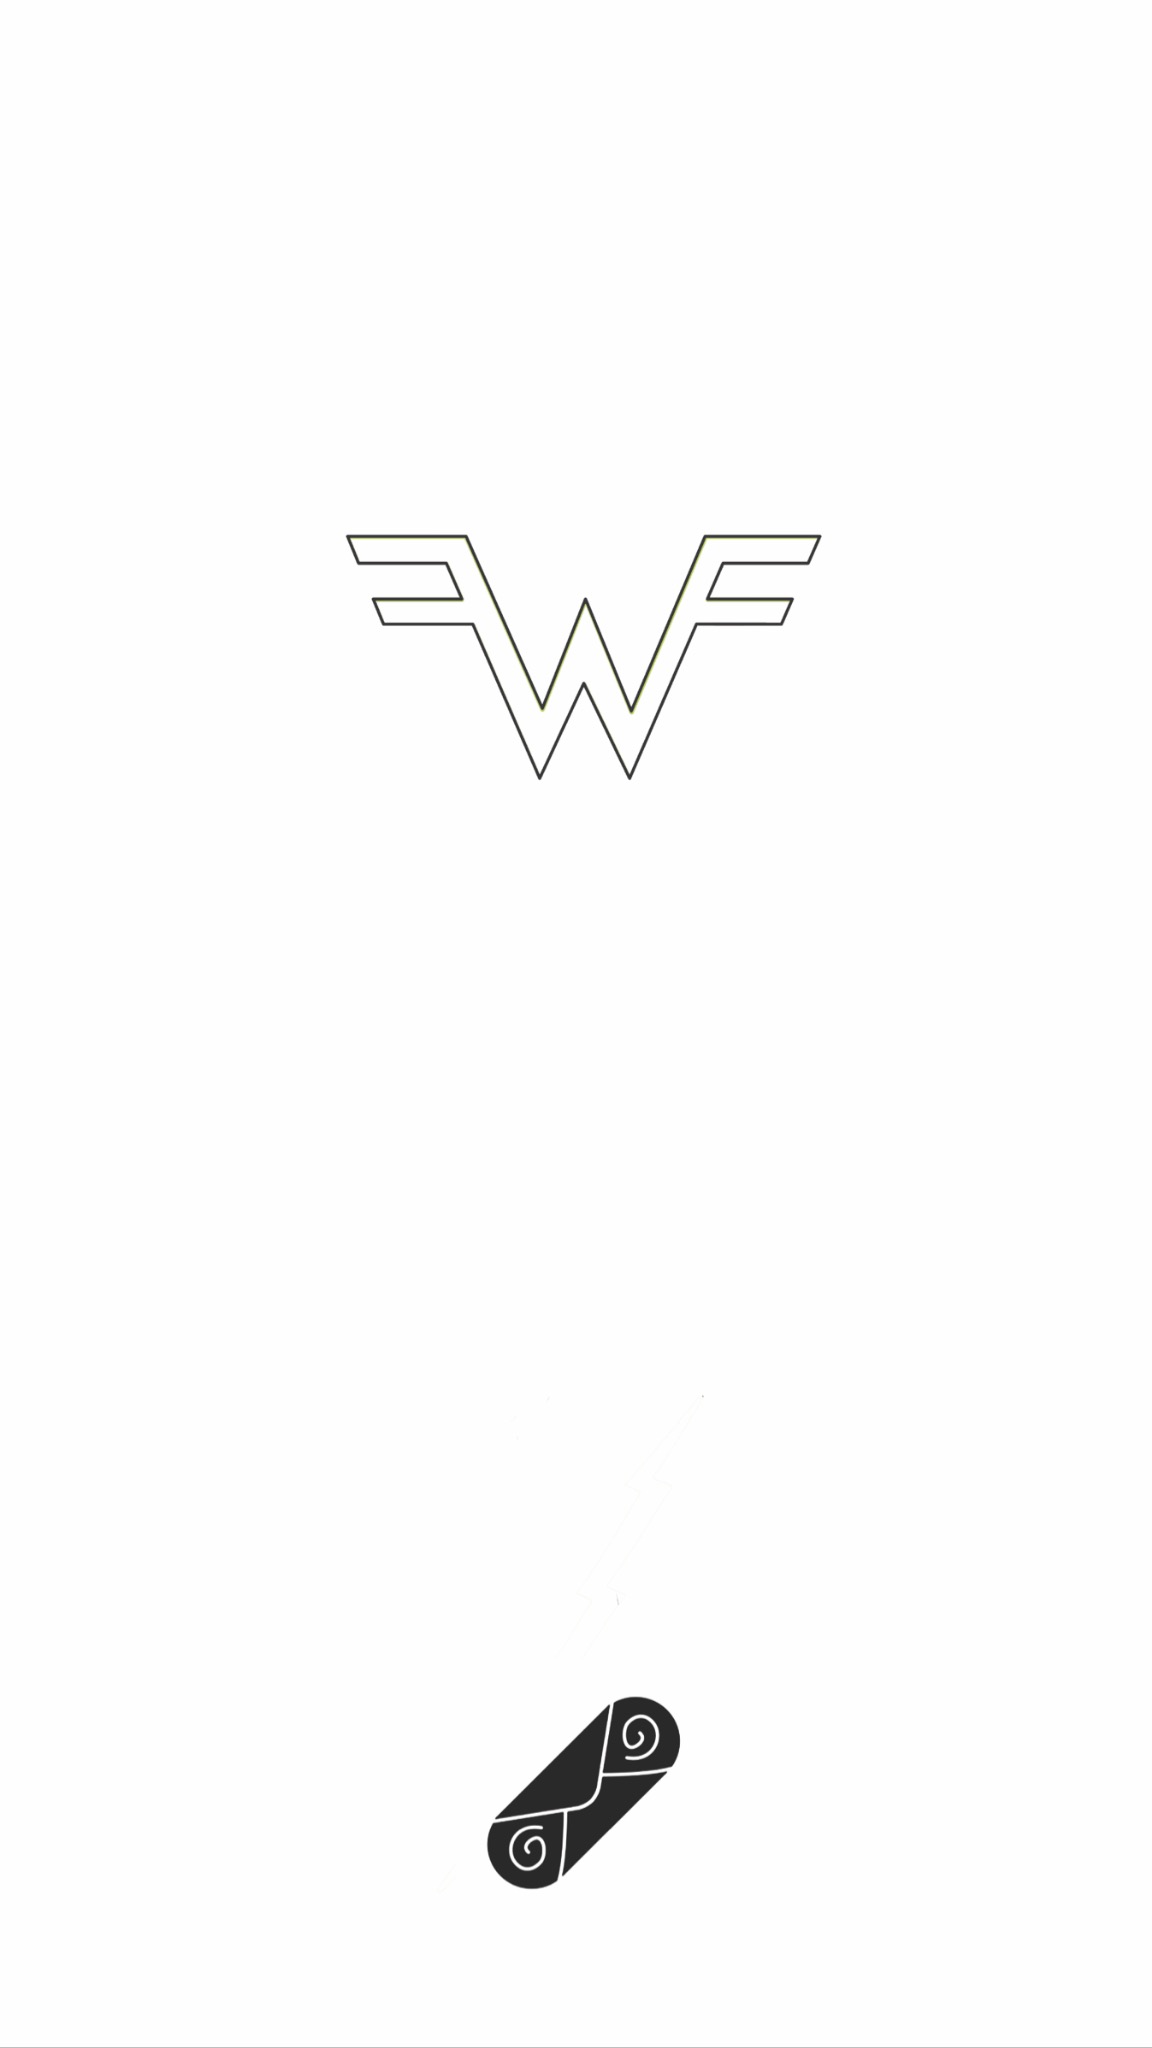 Weezer Wallpaper by WatchMeUnravel on DeviantArt